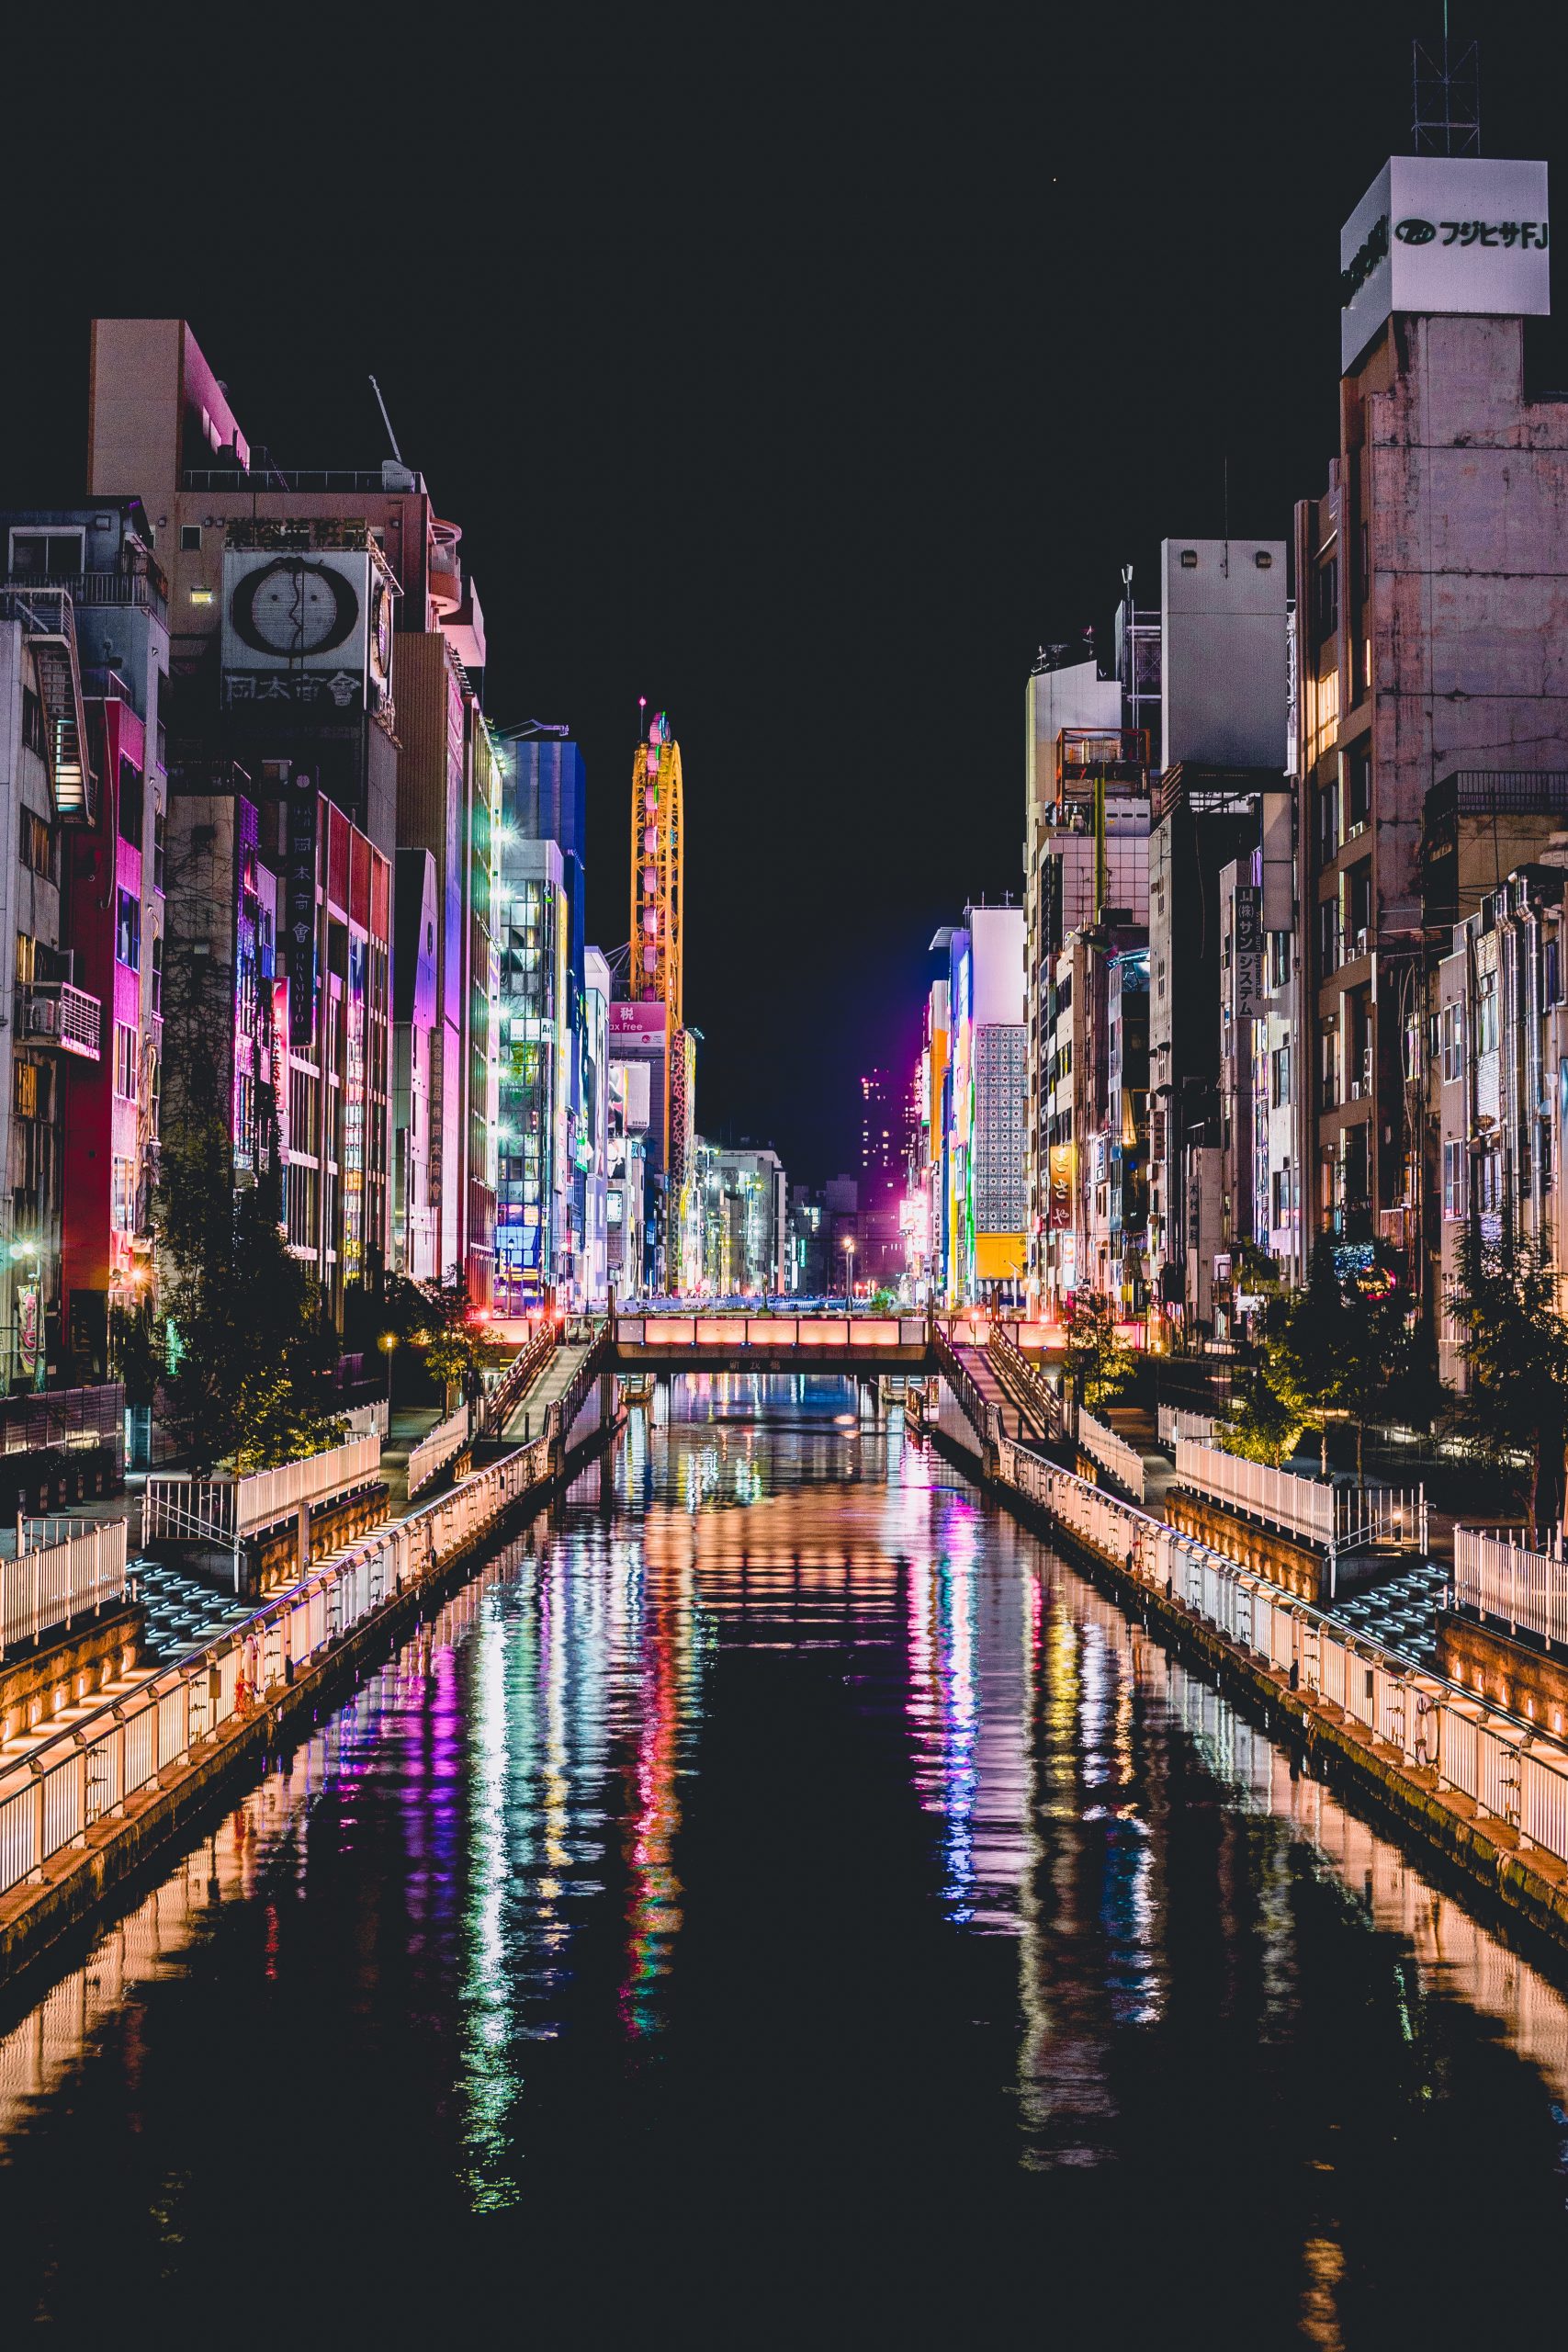 Japan Osaka scaled viajes a medida y viajes de novios